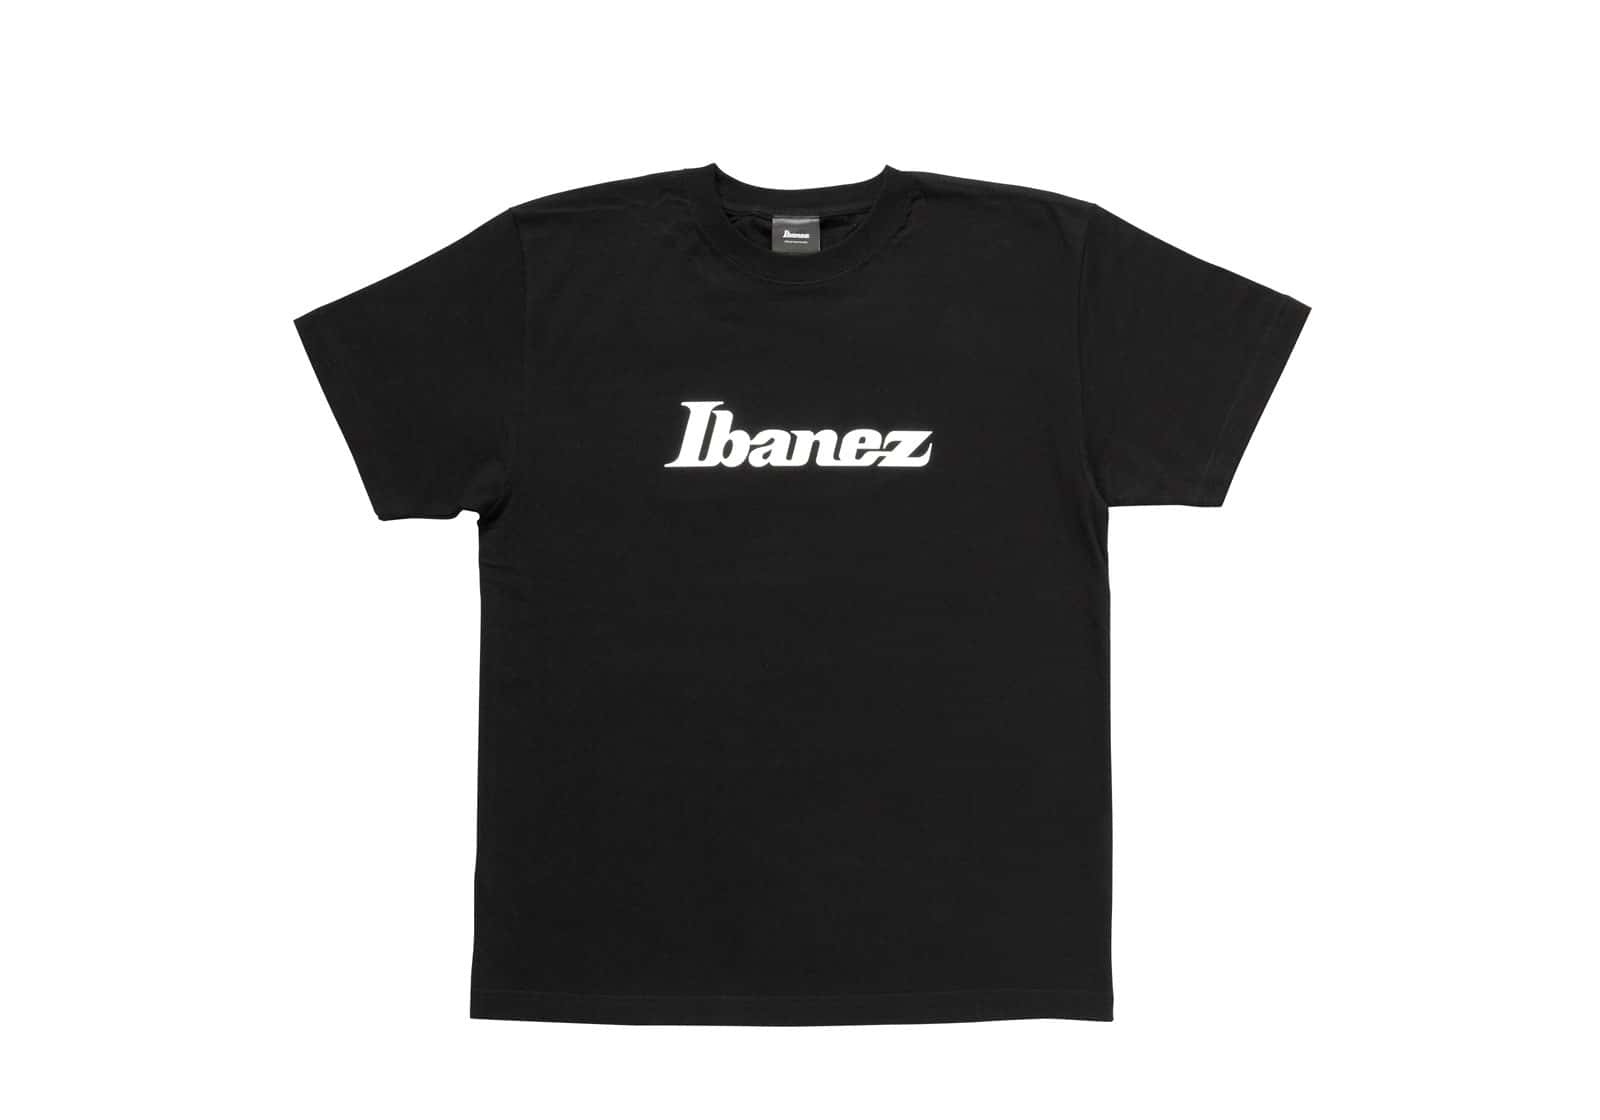 IBANEZ T-SHIRT IBAT007 SIZE XL